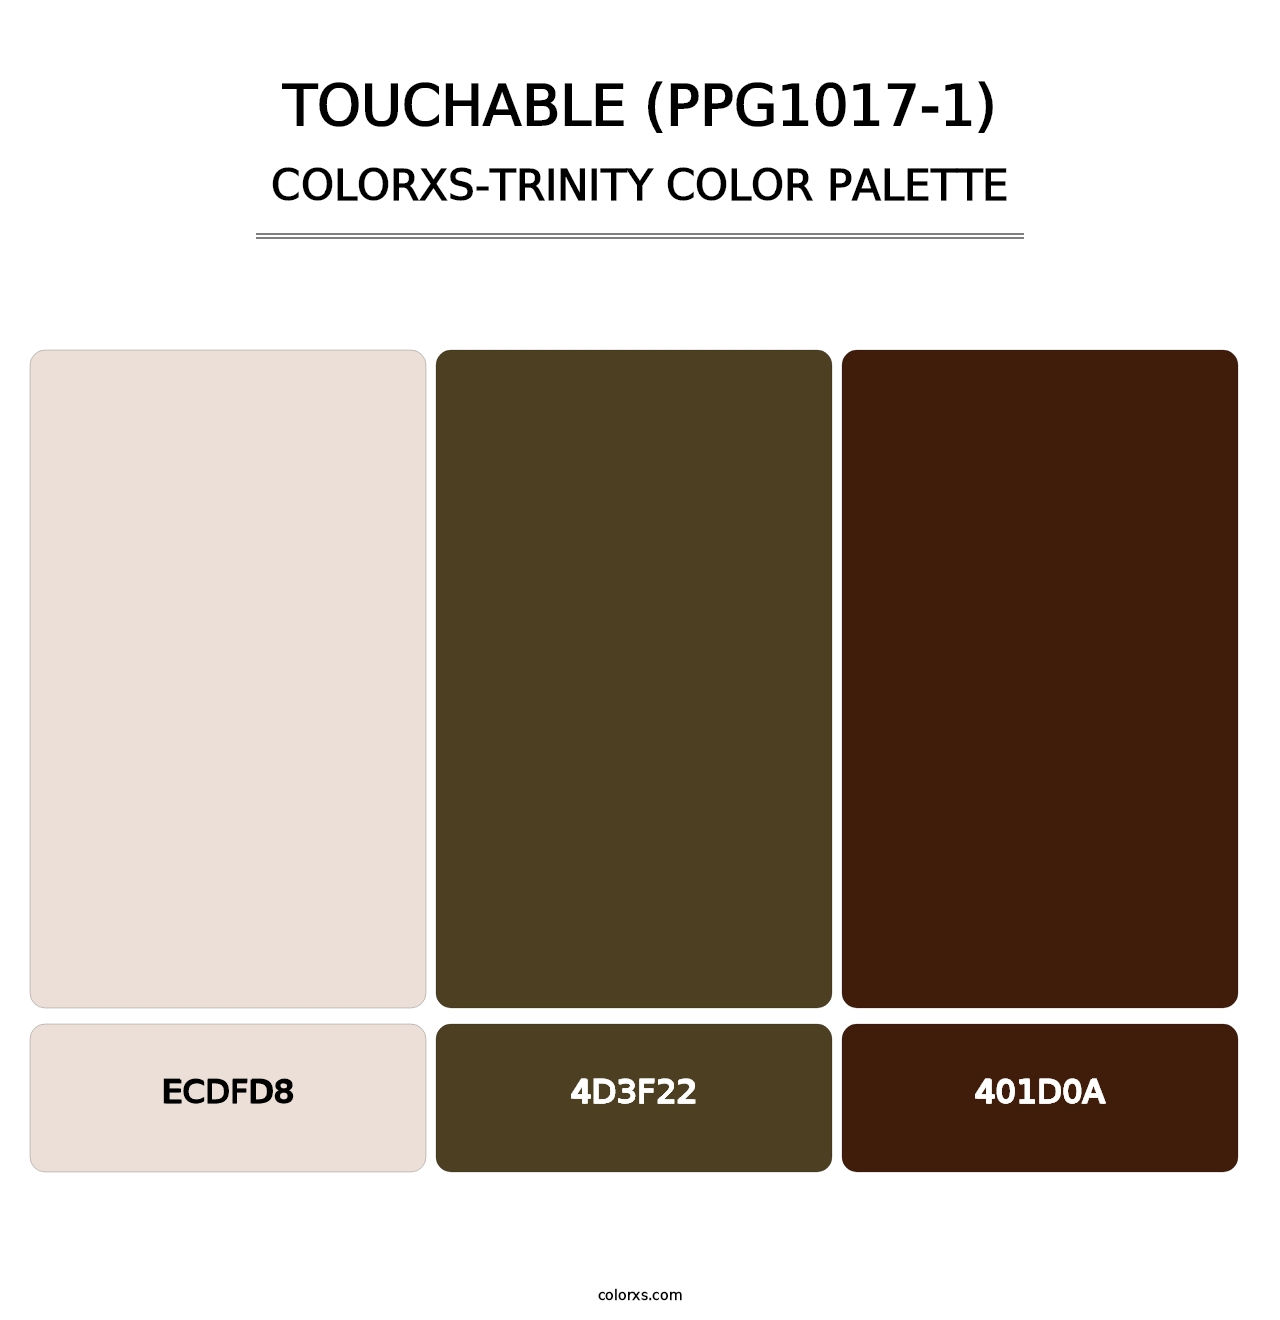 Touchable (PPG1017-1) - Colorxs Trinity Palette